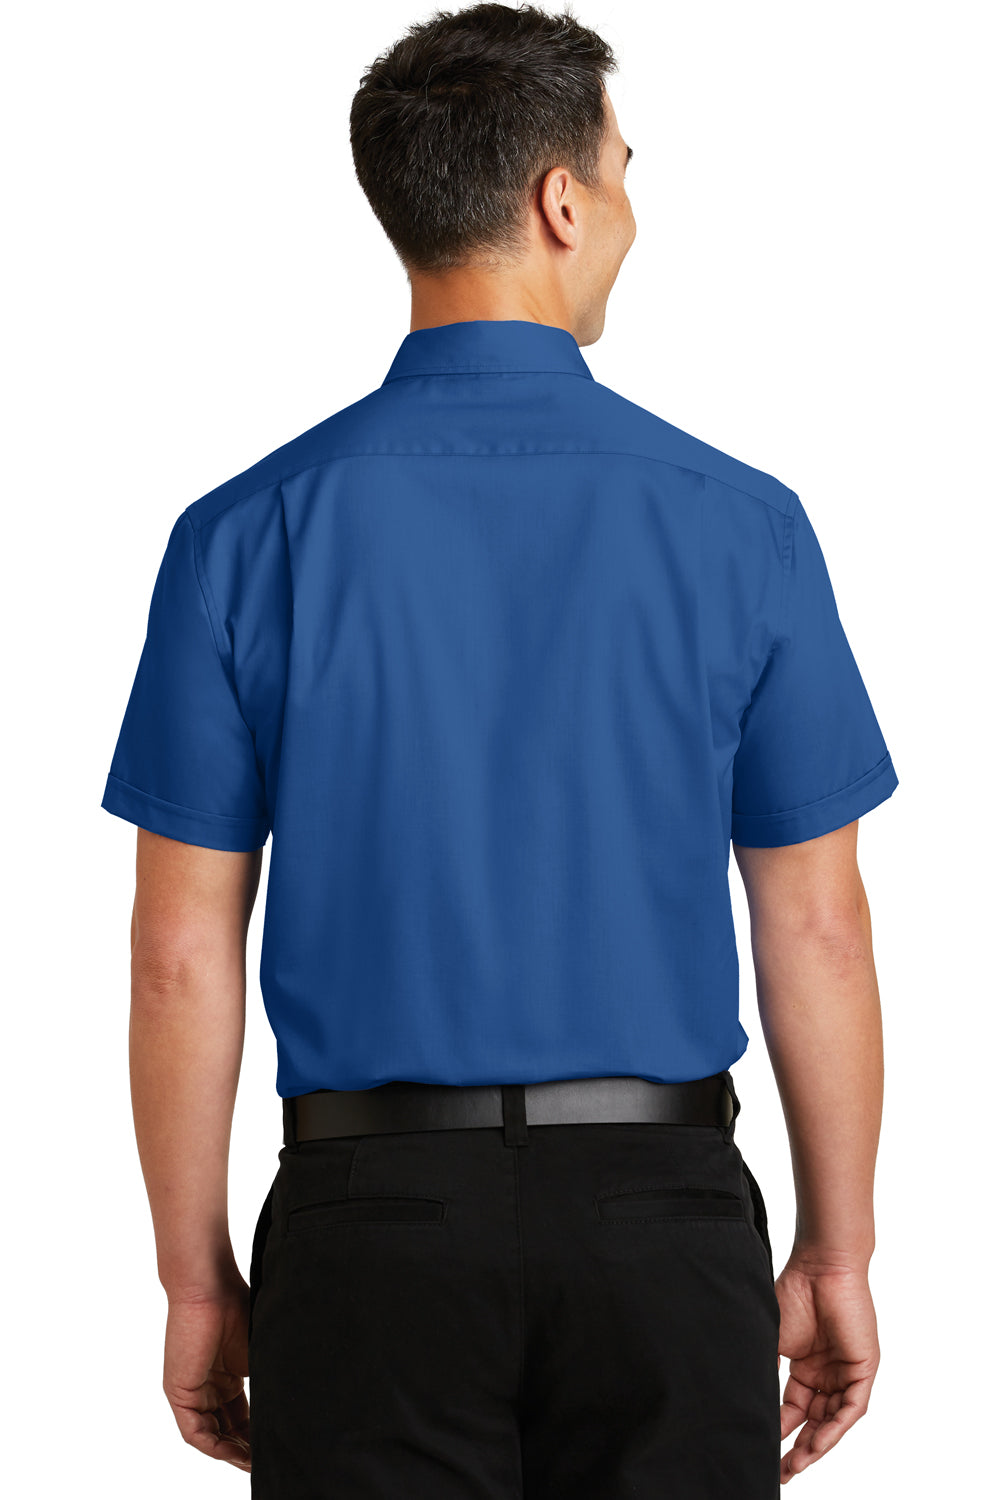 Port Authority S664 Mens SuperPro Wrinkle Resistant Short Sleeve Button Down Shirt w/ Pocket Royal Blue Back